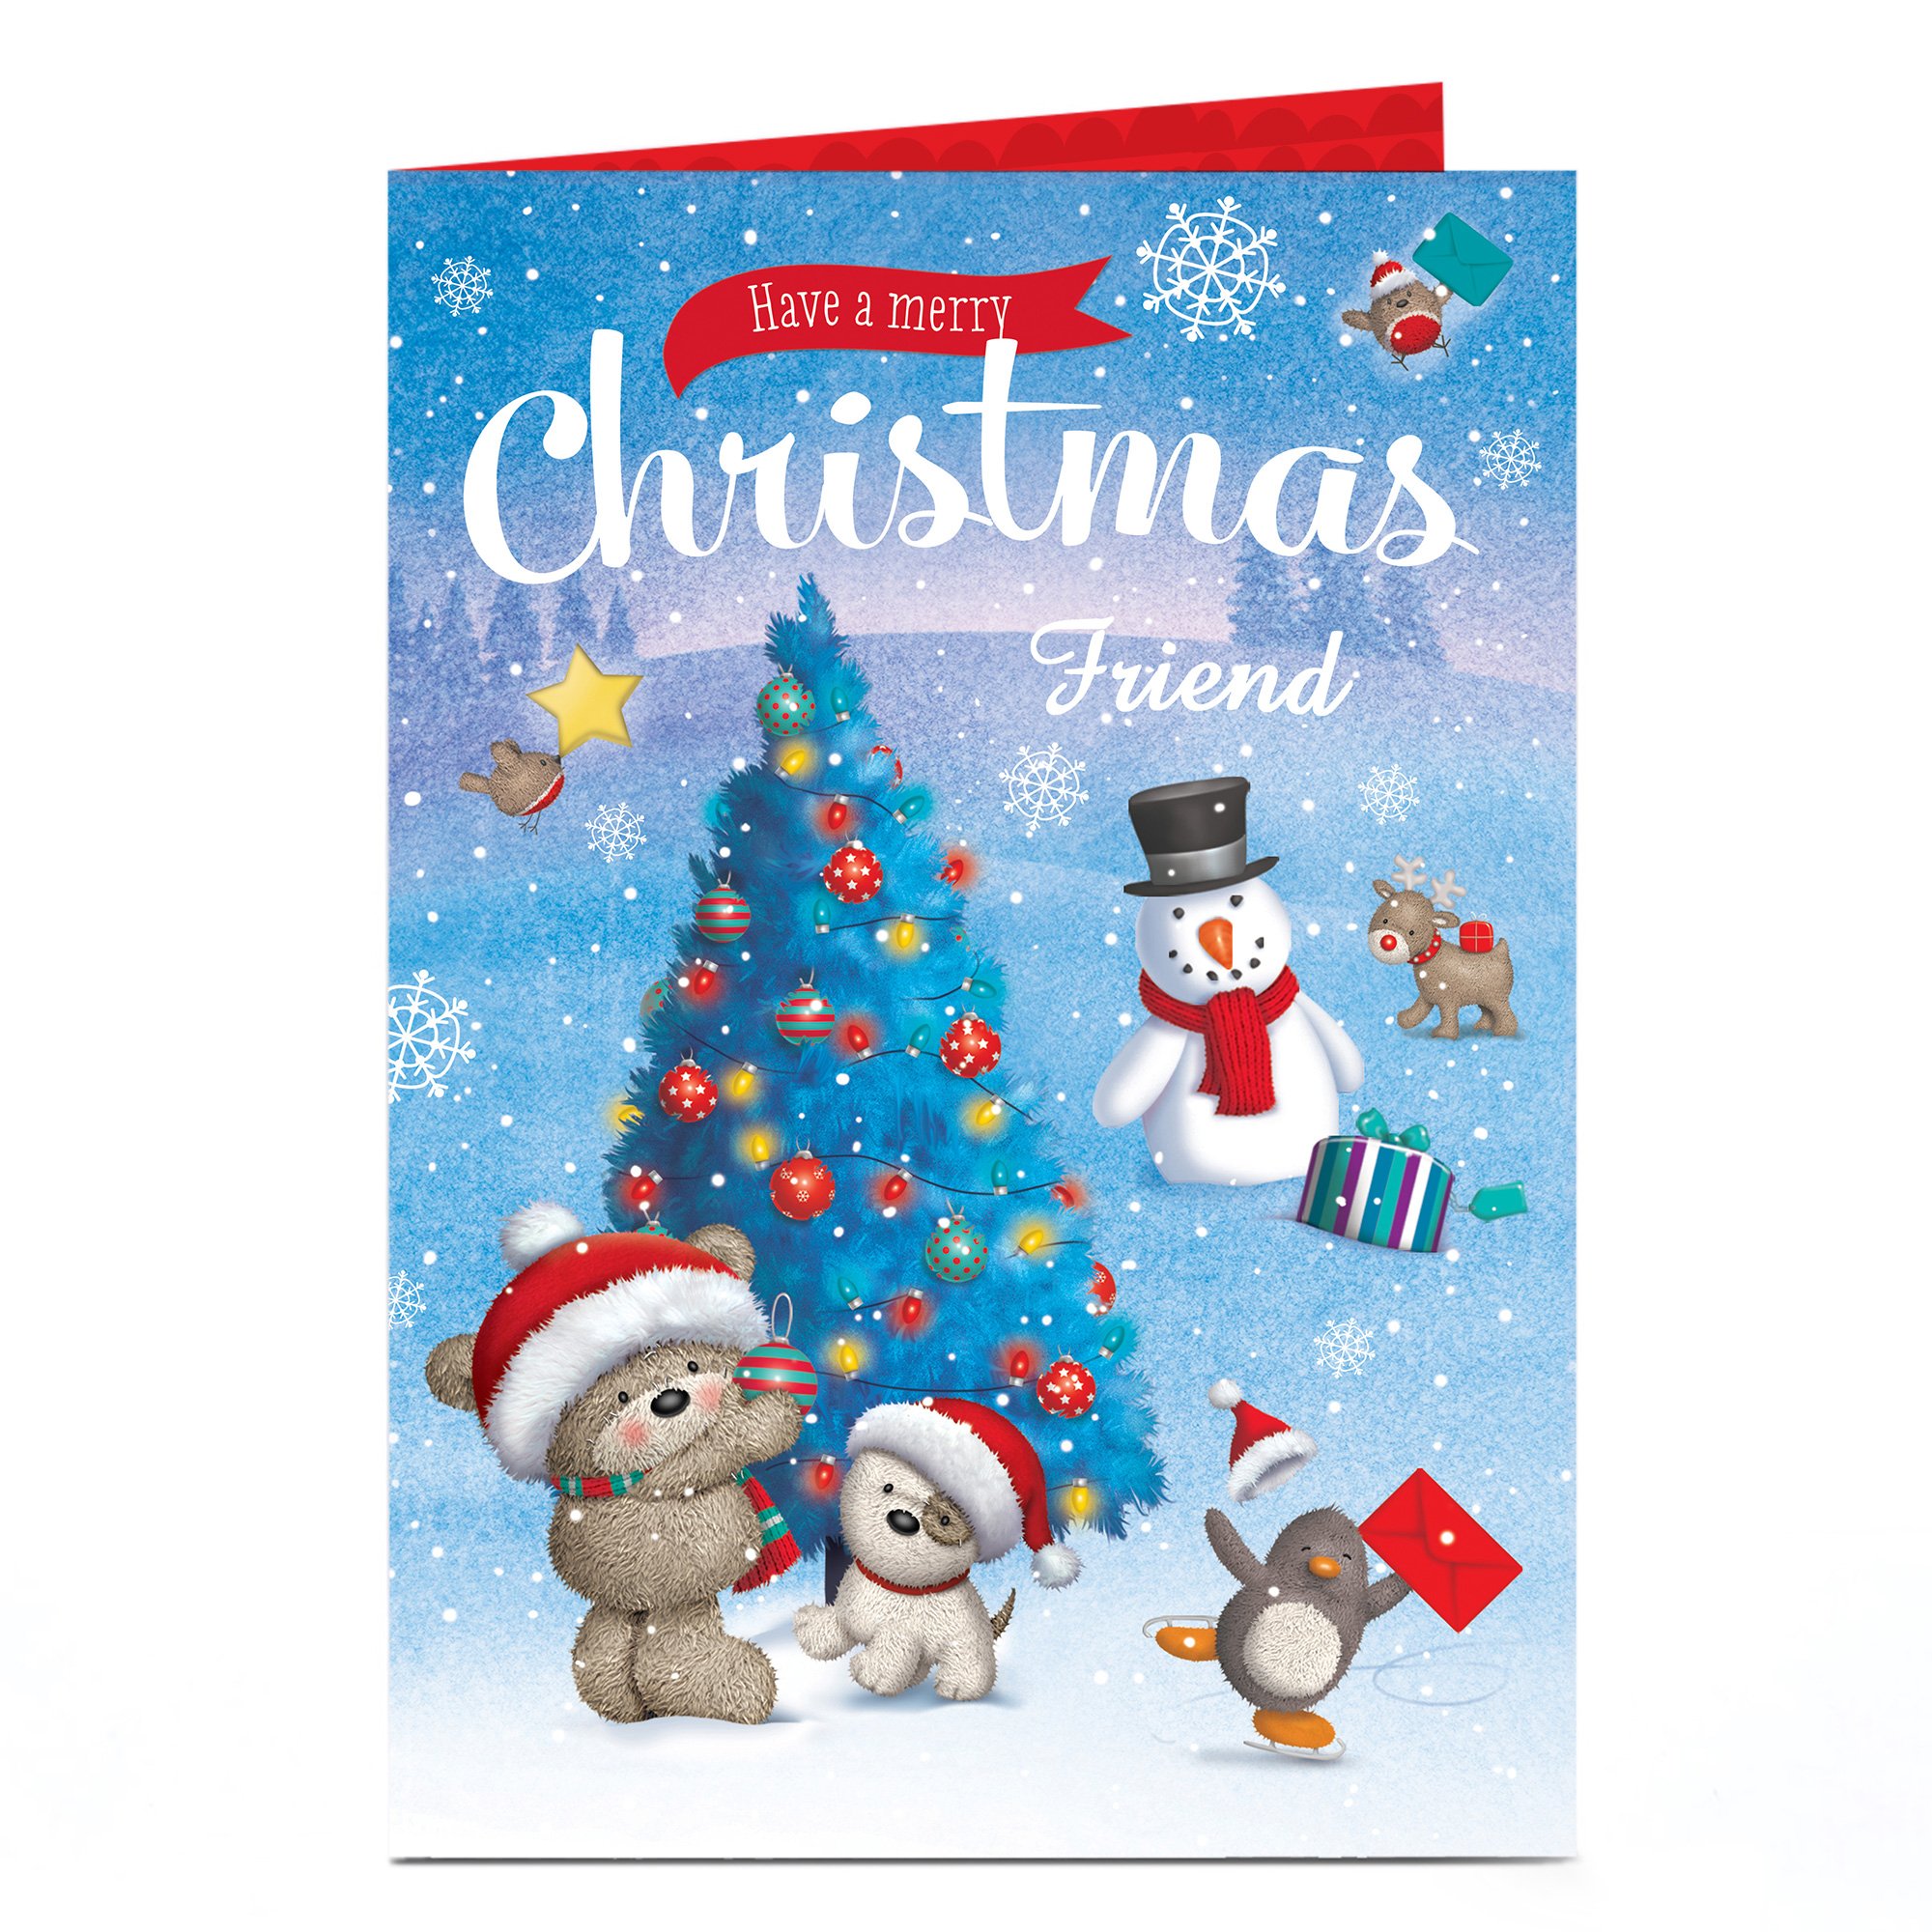 Personalised Hugs Christmas Card - Decorating Tree - Friend